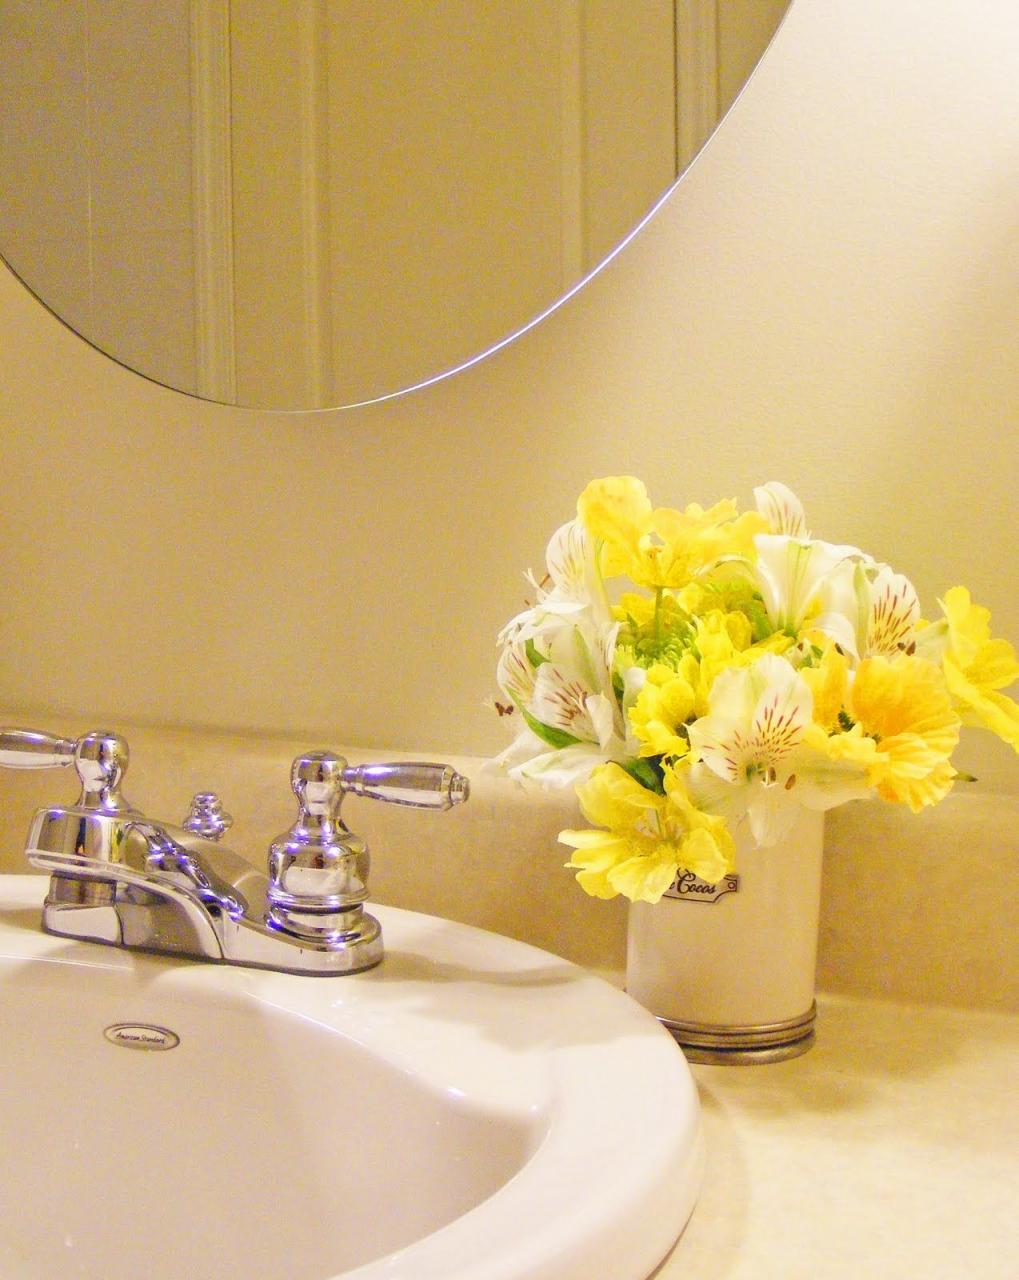 Bathroom Remodel Ideas With Flower home design Bathroom flowers